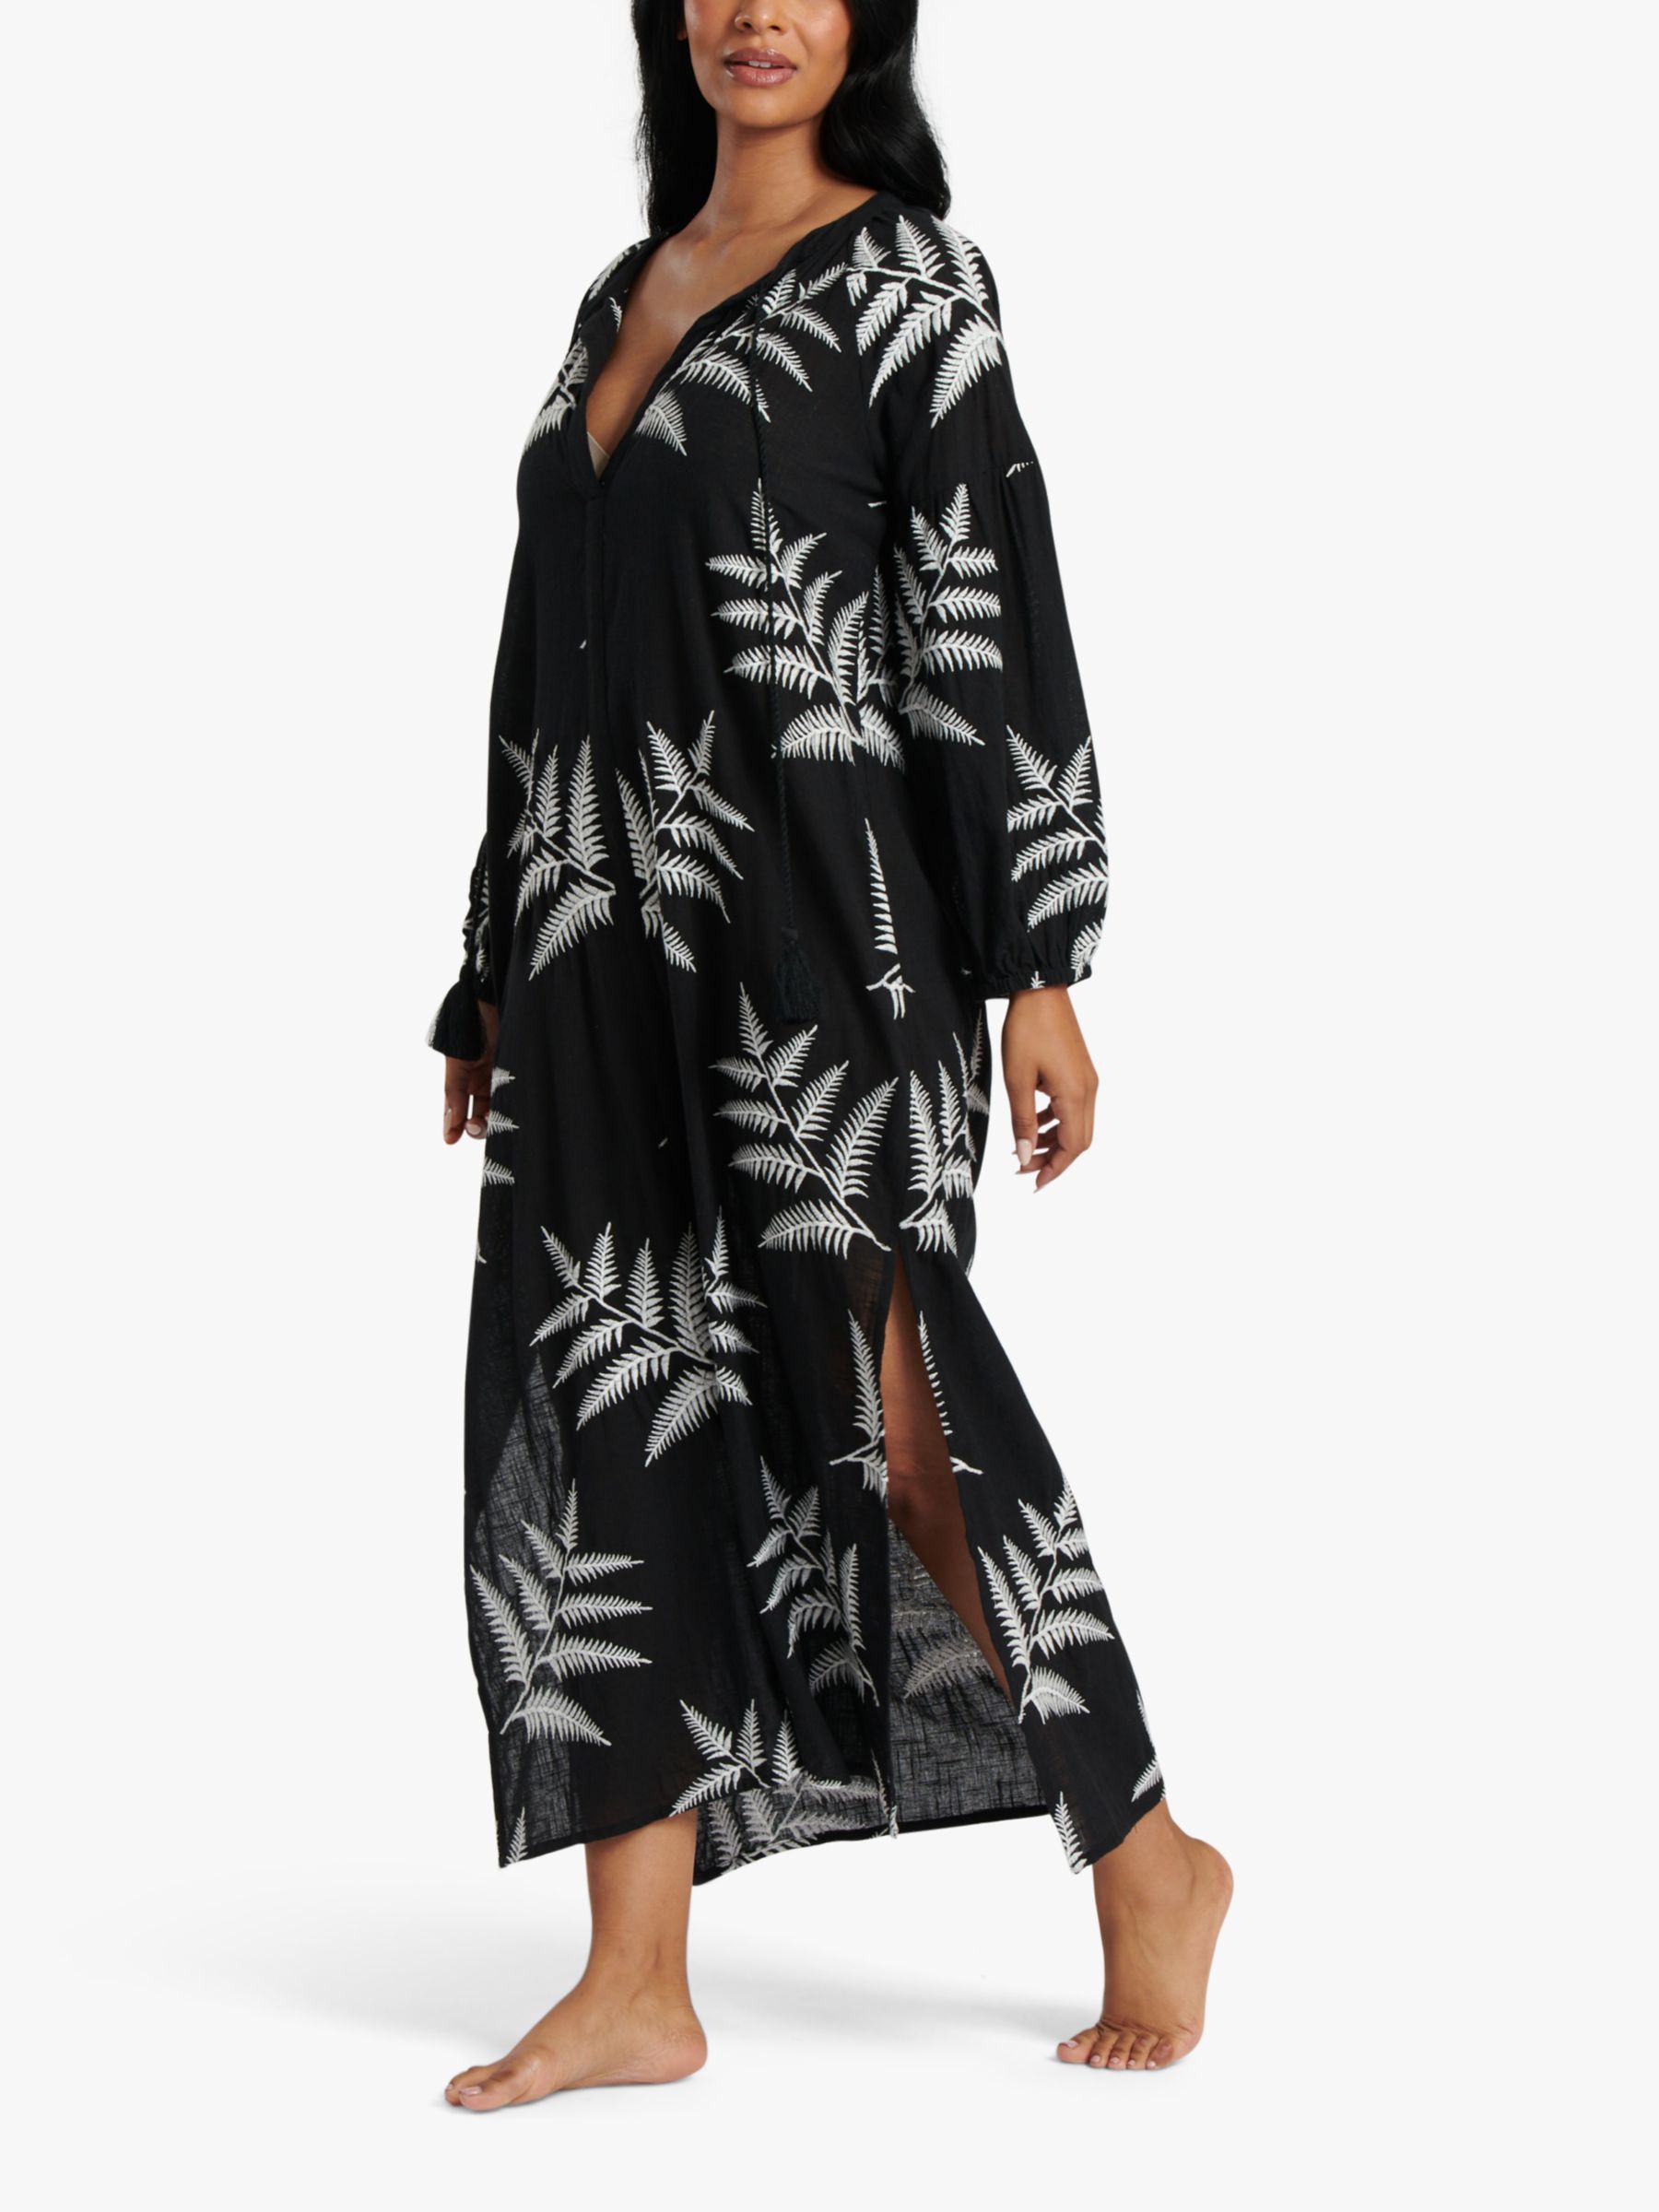 South Beach Palm Embroidered Maxi Dress, Black/White, 14